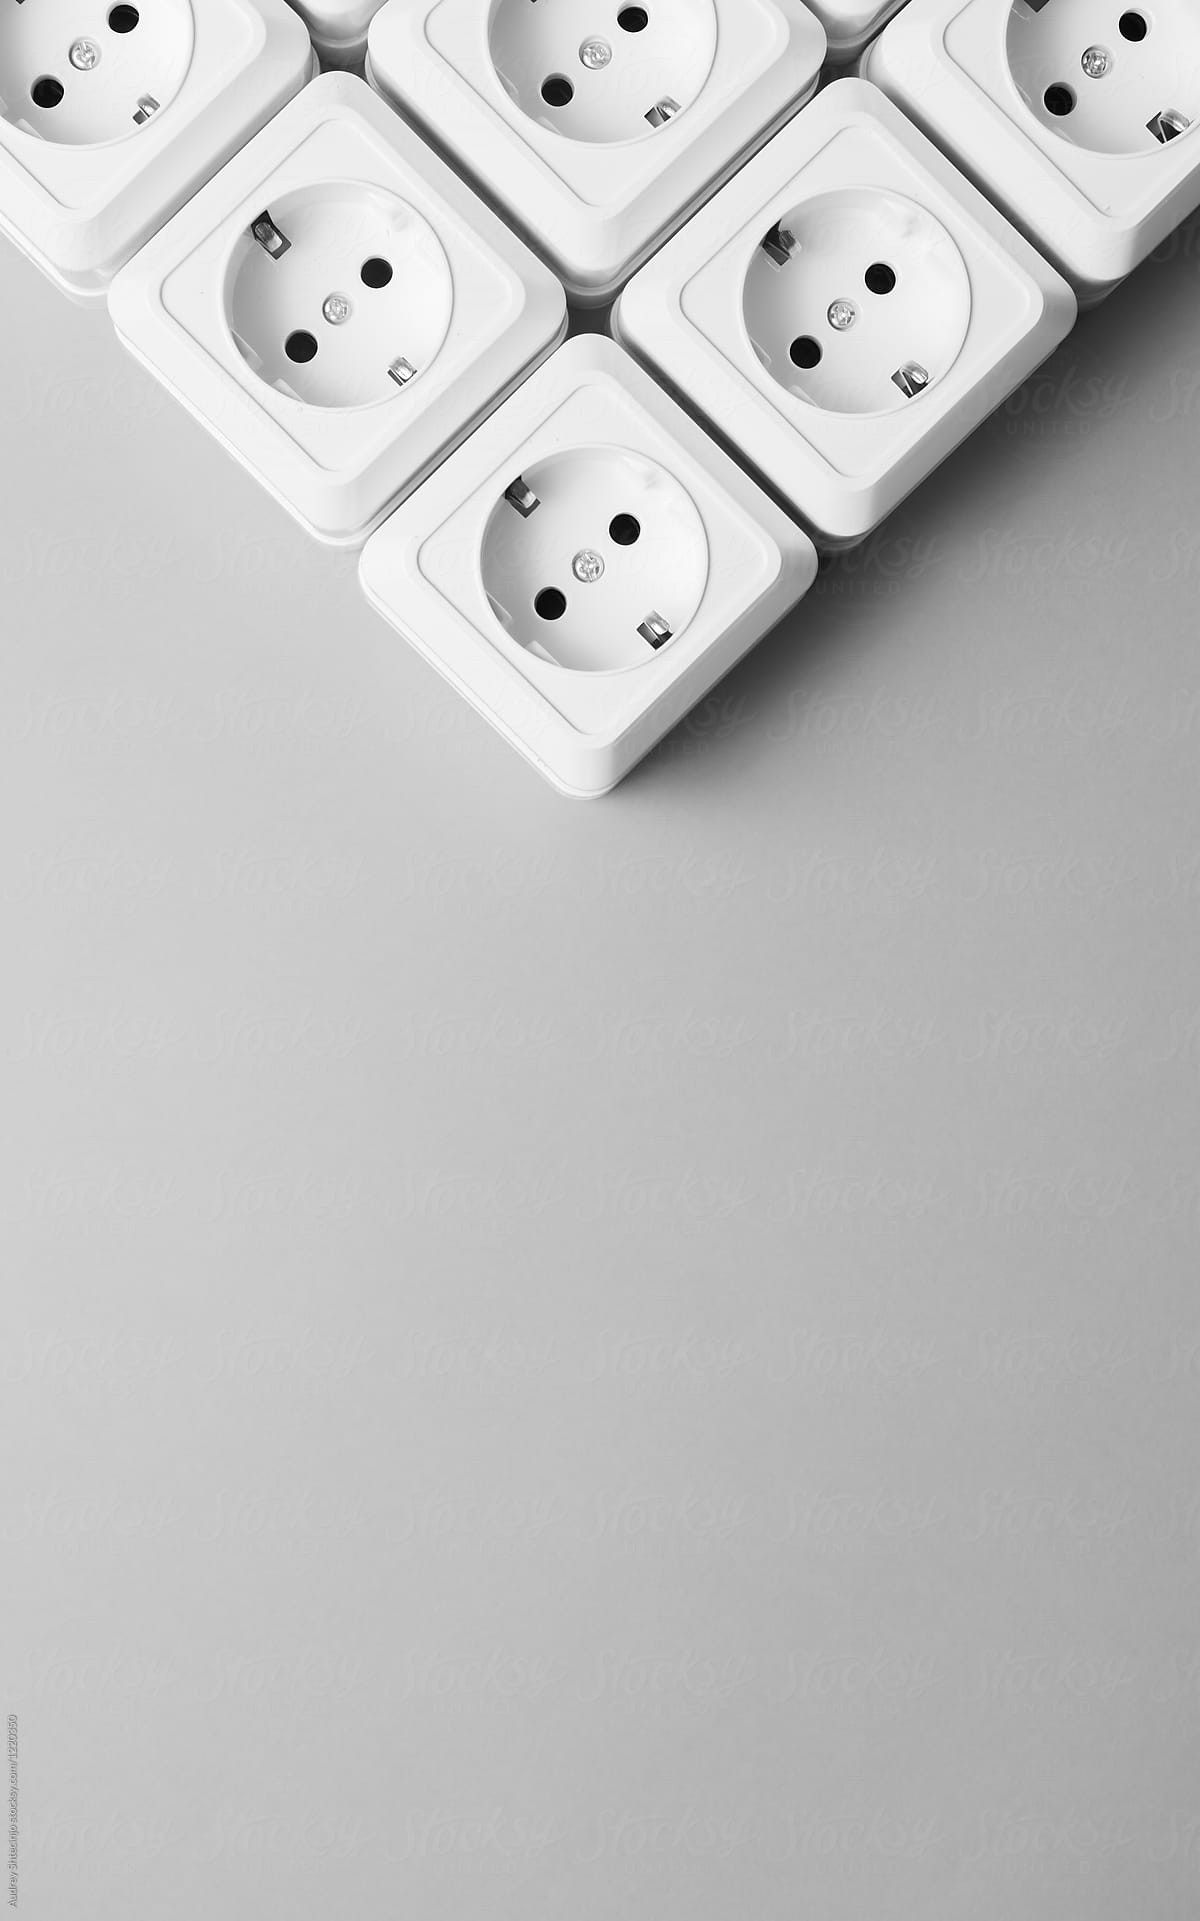 Blanc eletric plug on white/gray background.